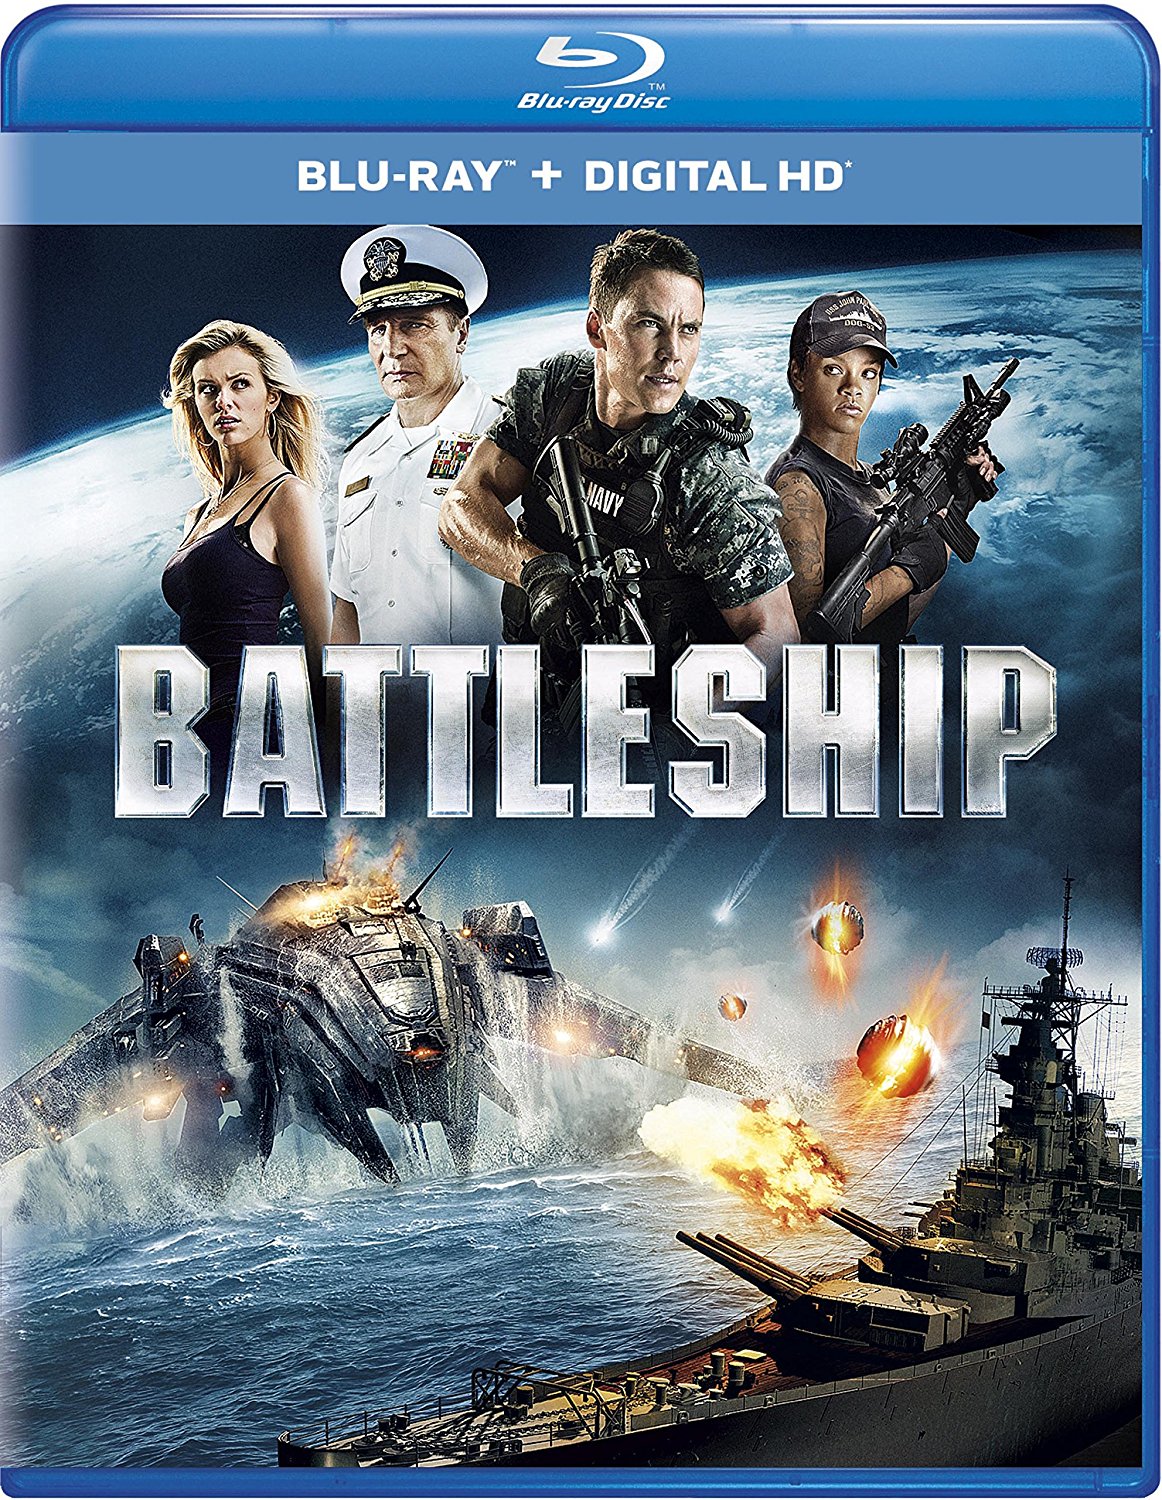 Battleship on Blu-ray – Just $7.99!